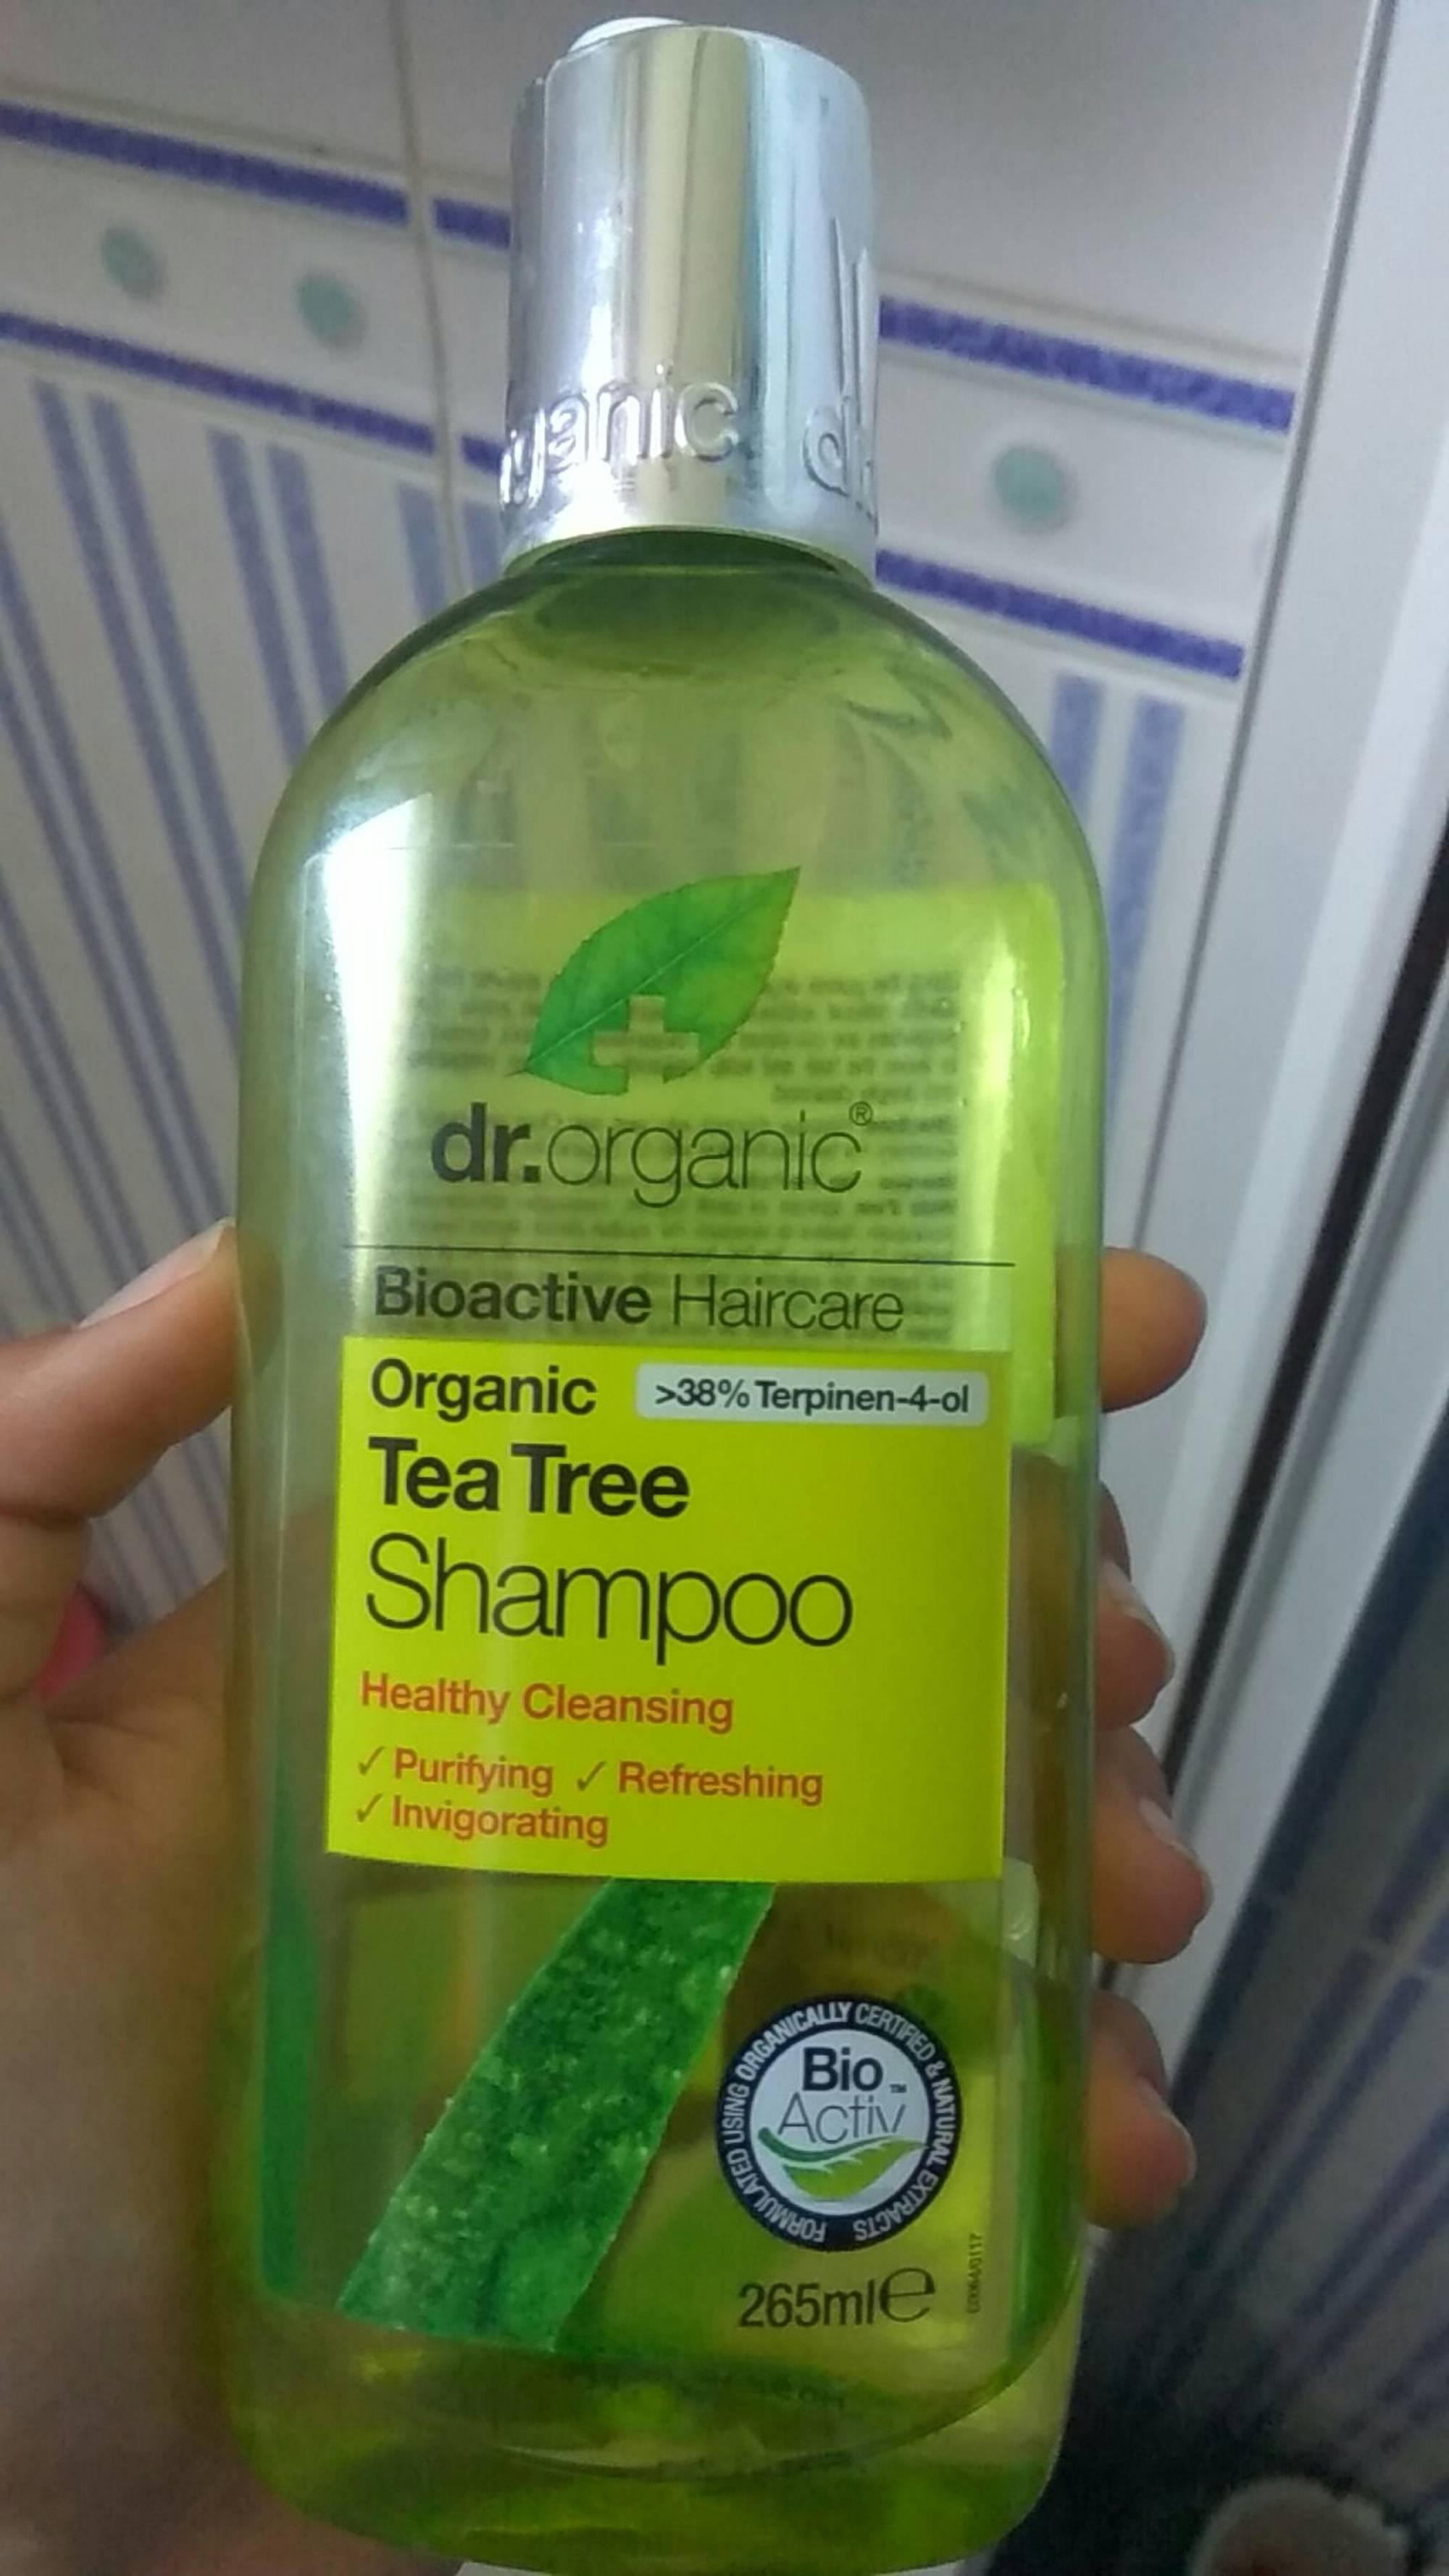 DR. ORGANIC - Tea tree shampoo